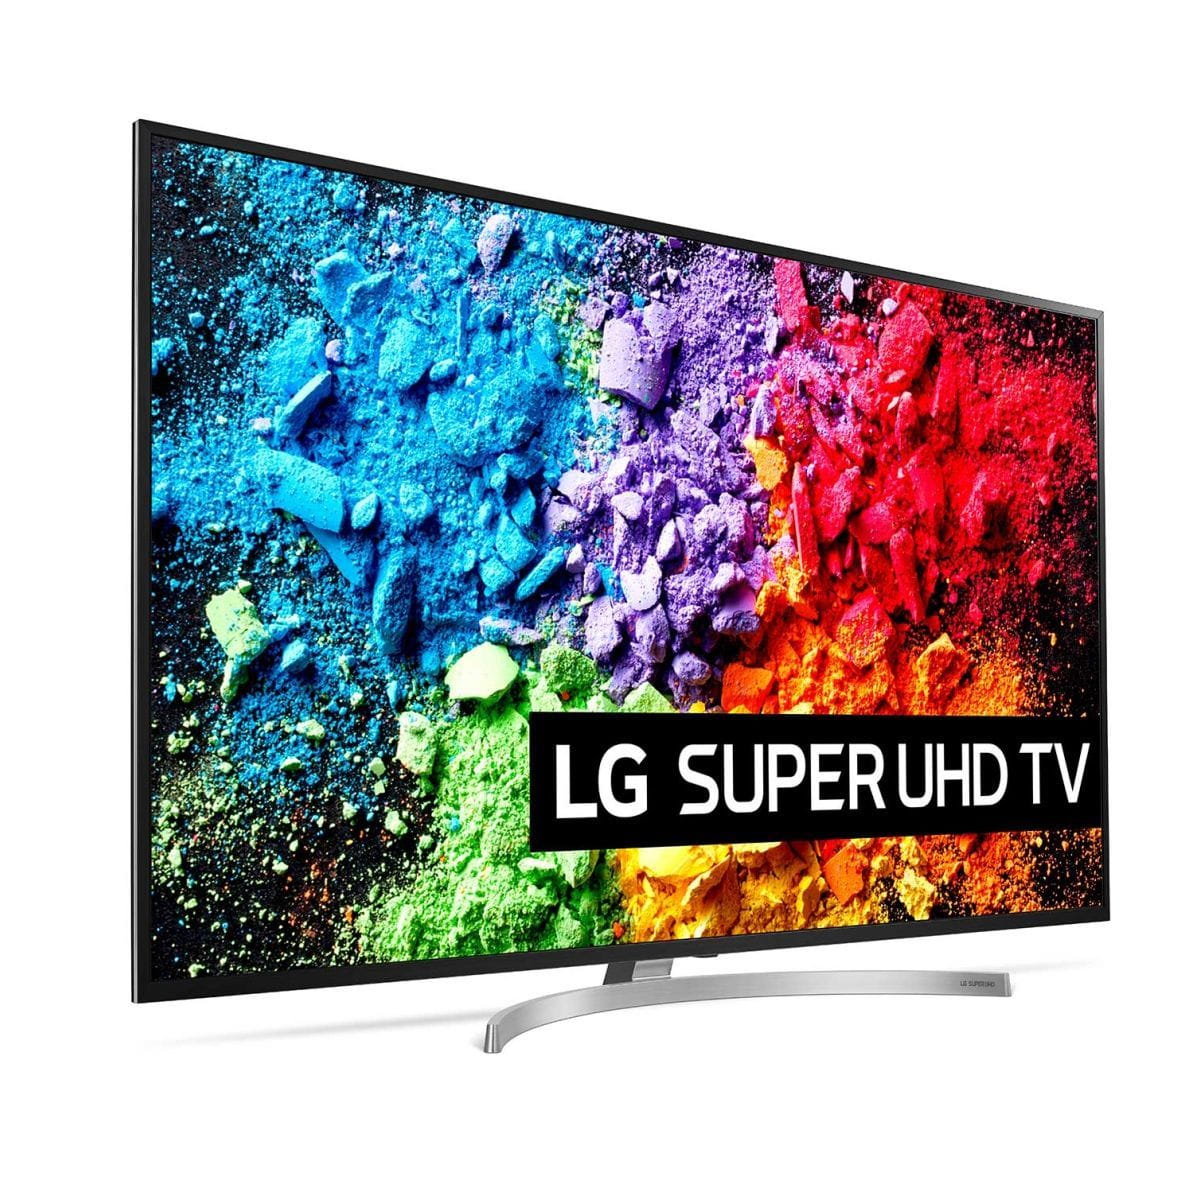 SMART TV LG 55SK8100PLA / 55" LED Flat Nano Cell display 4K UHD / webOS 4.0 / Dolby Atmos / VESA /